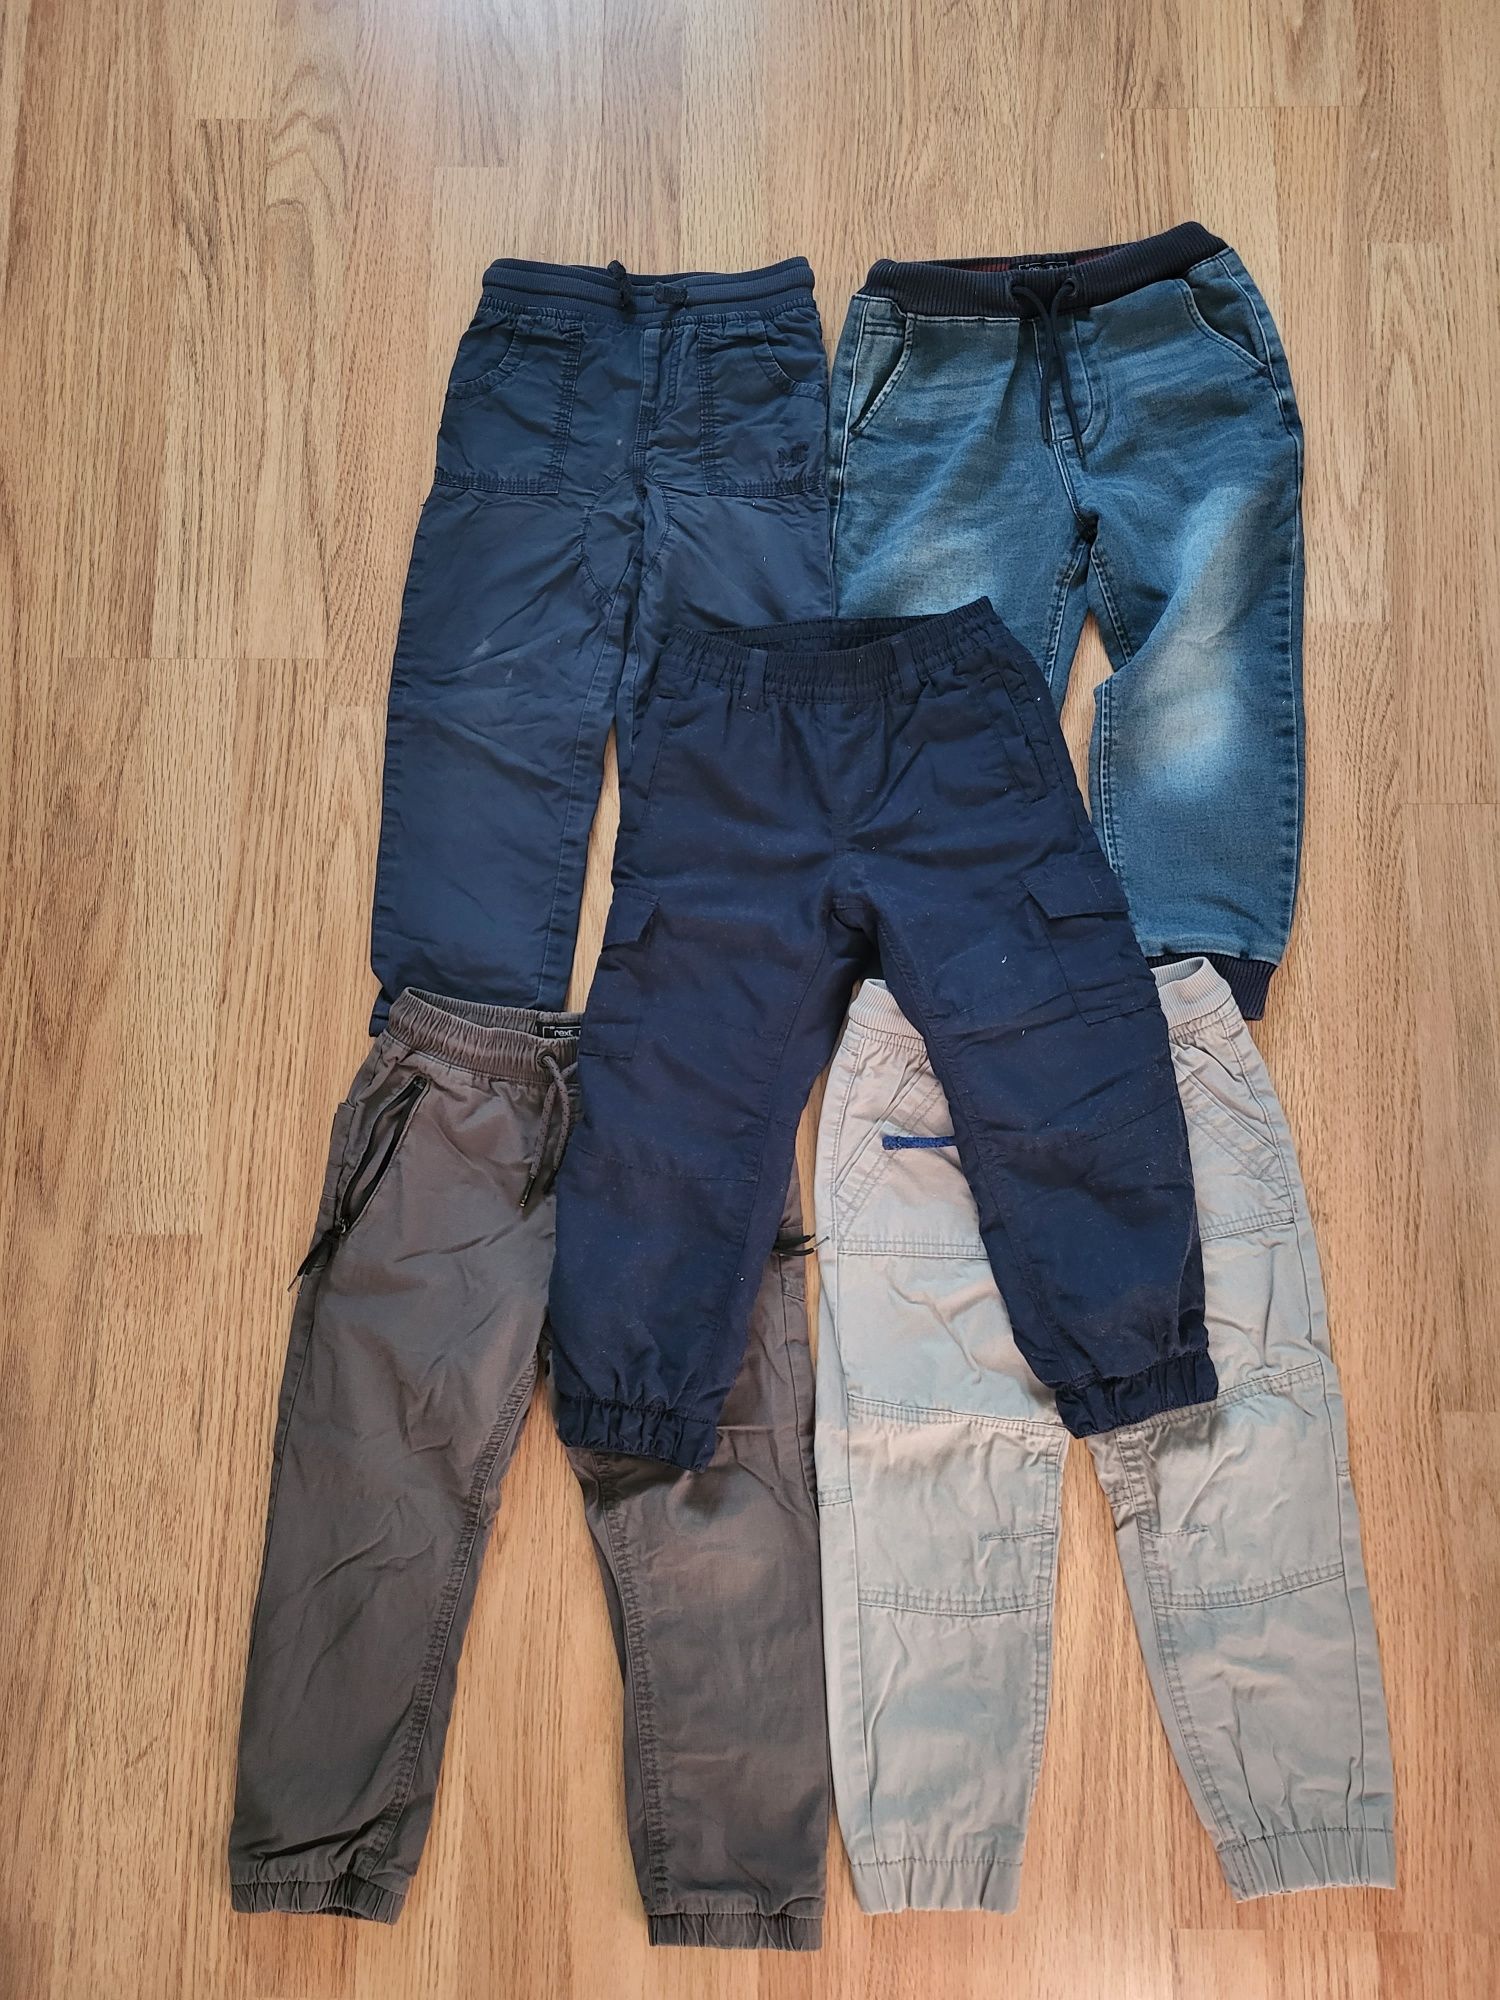 Set 5 pantaloni dublati 4 - 5 ani (masura 110)